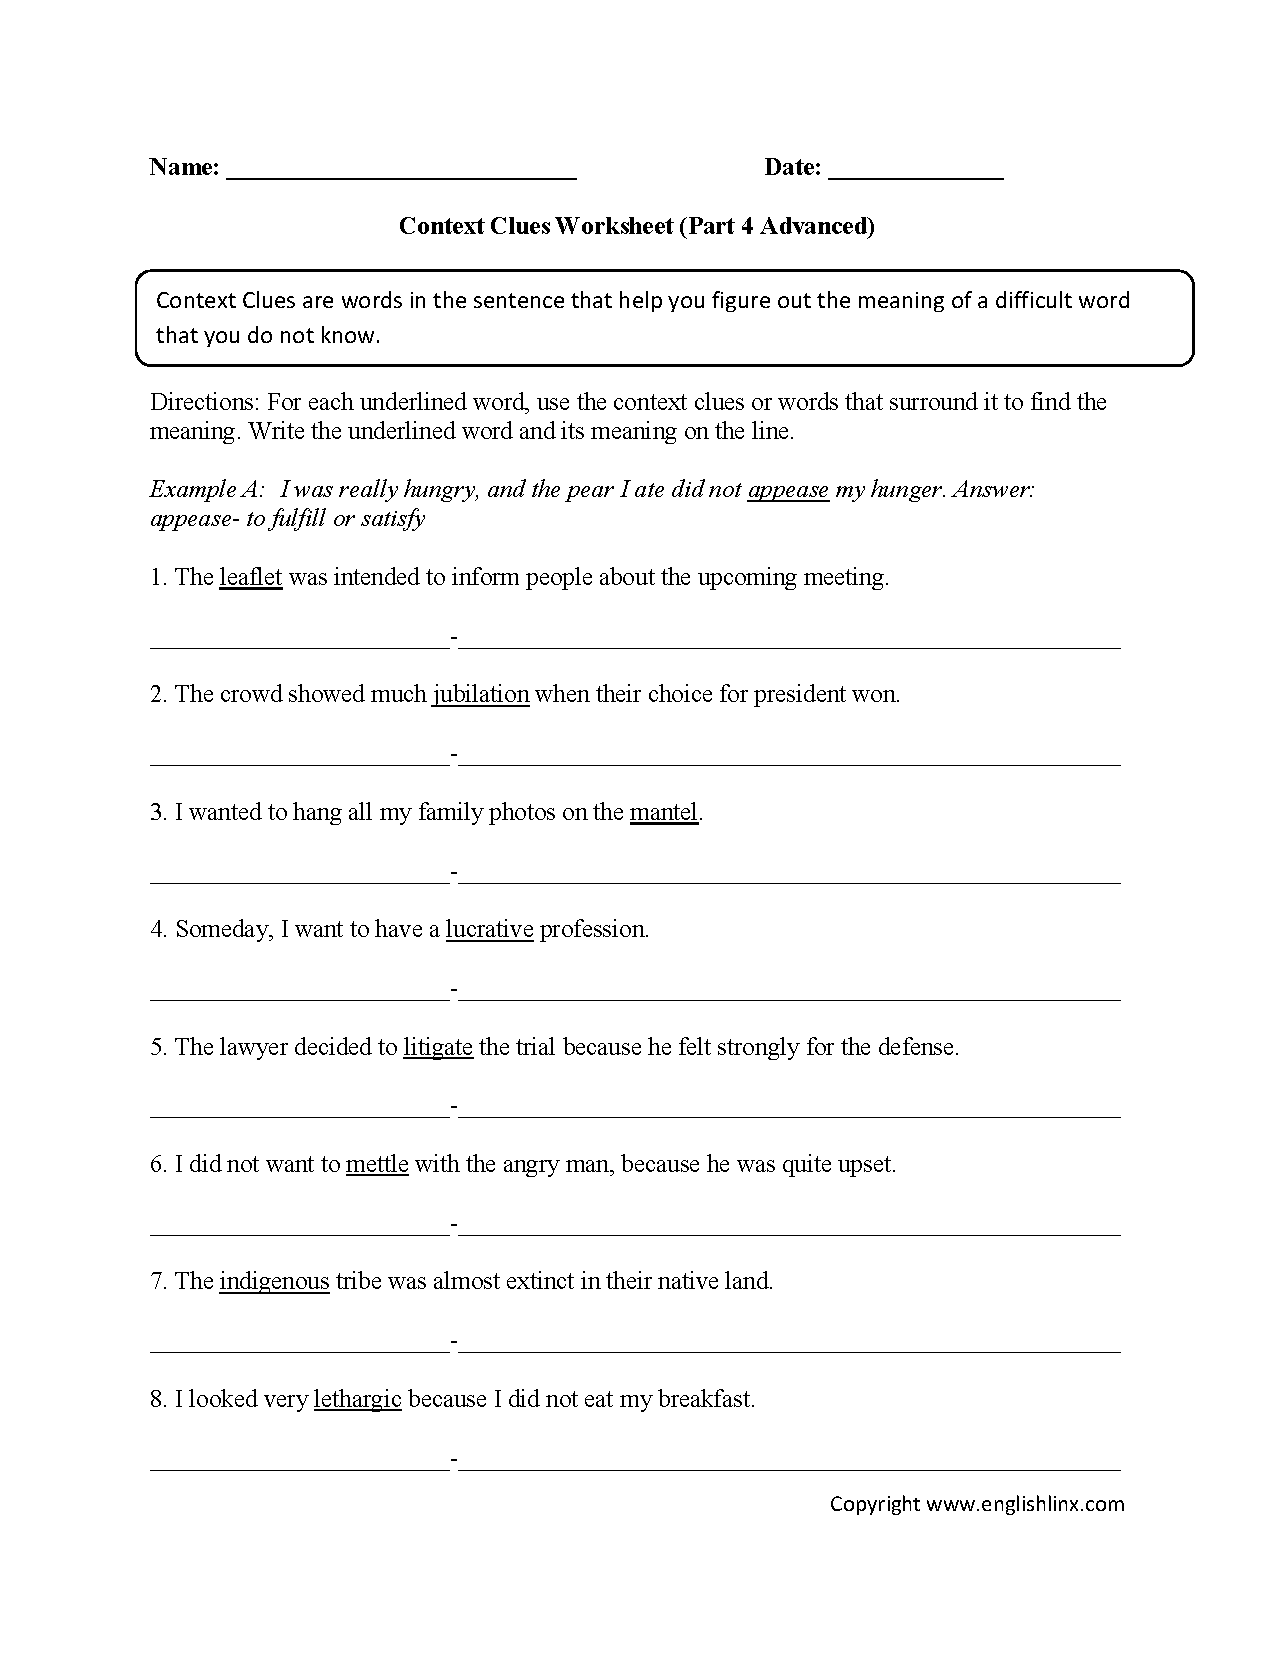 Context Clues Worksheets Part 4 Advanced